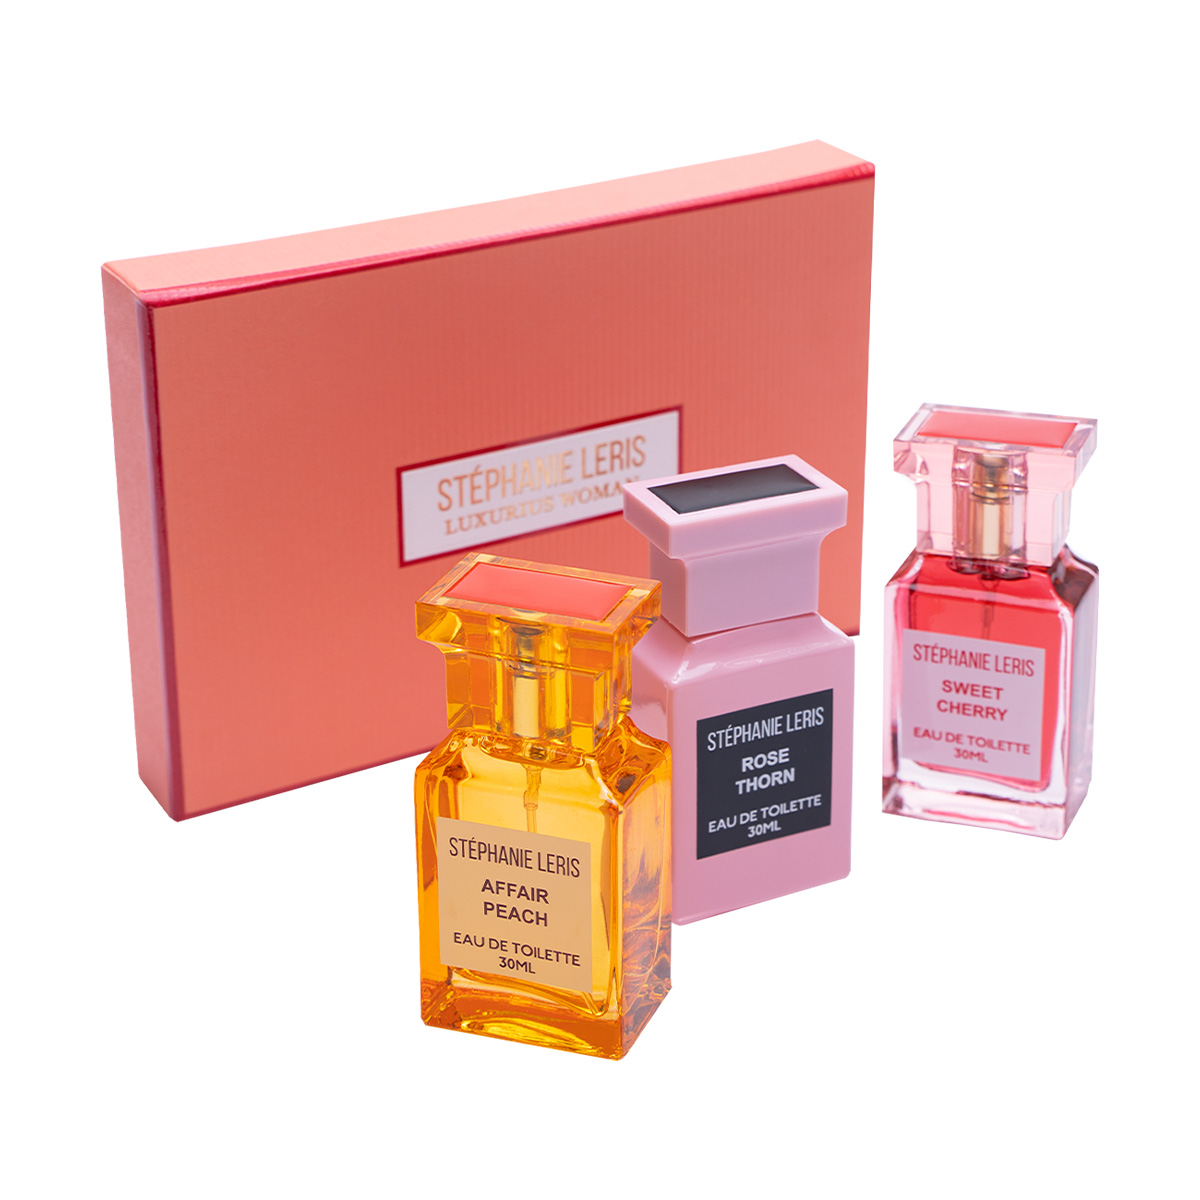 парфюм женский stephanie leris счастье 100 мл кулон в подарок Stephanie Leris Luxurious Woman, набор женского парфюма 3 в 1 (3 шт. по 30 мл)